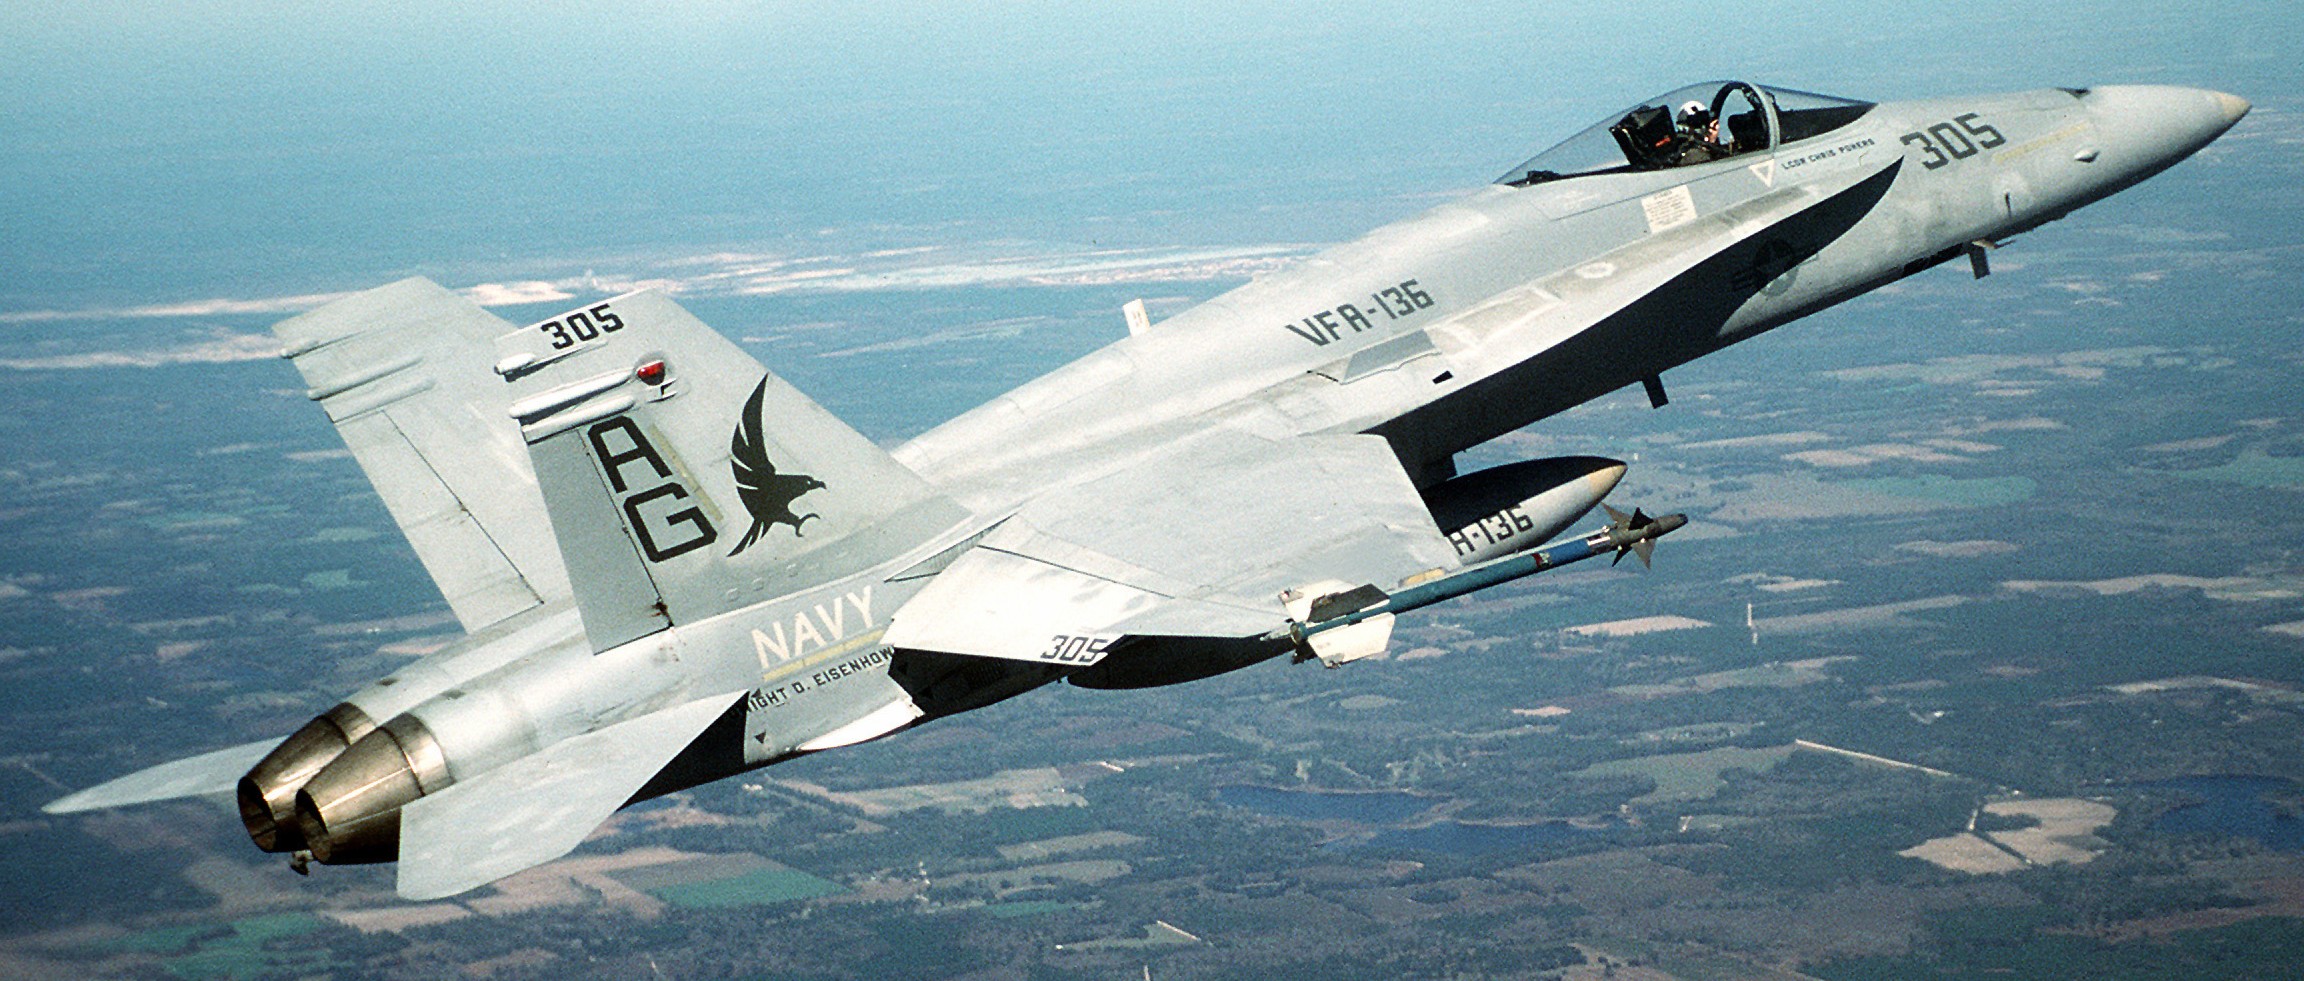 vfa-136 knighthawks strike fighter squadron f/a-18a hornet 1989 96 cvw-7